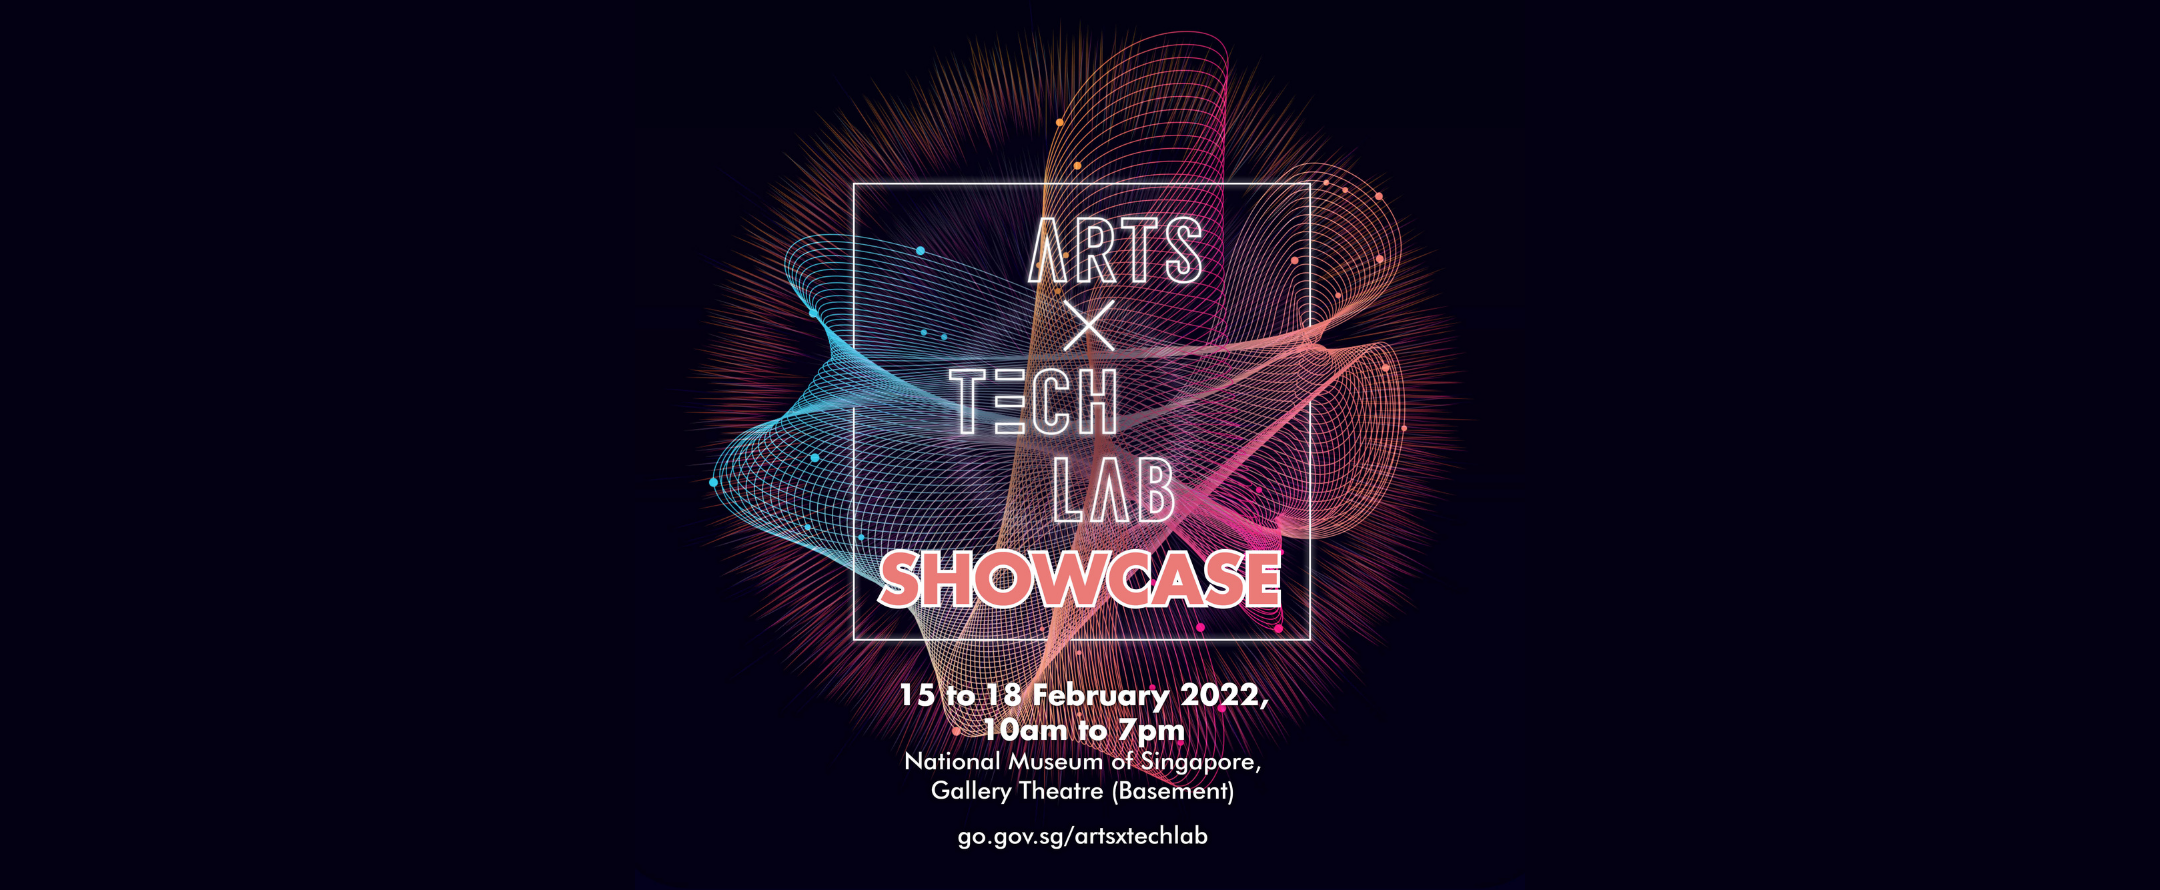 Arts Tech Lab Showcase 2022